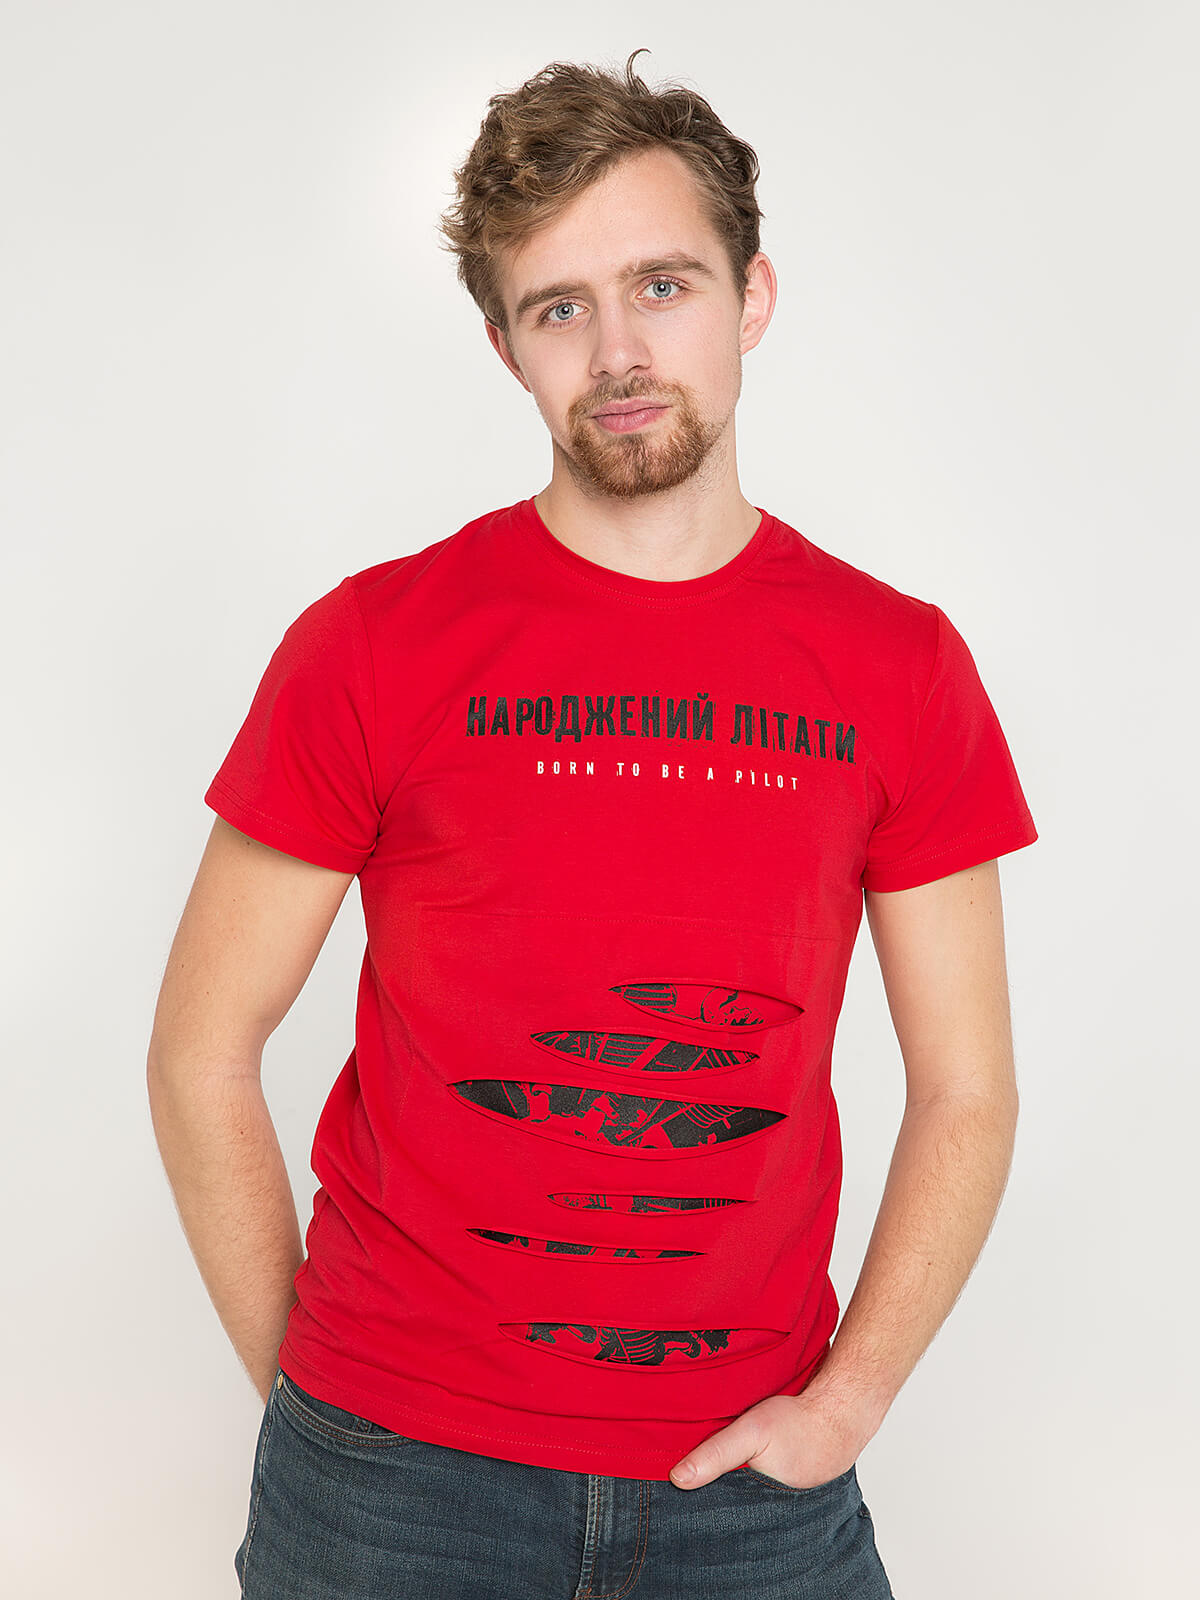 Men's T-Shirt Born To Fly. Color red. Unisex T-shirt (men’s sizes).